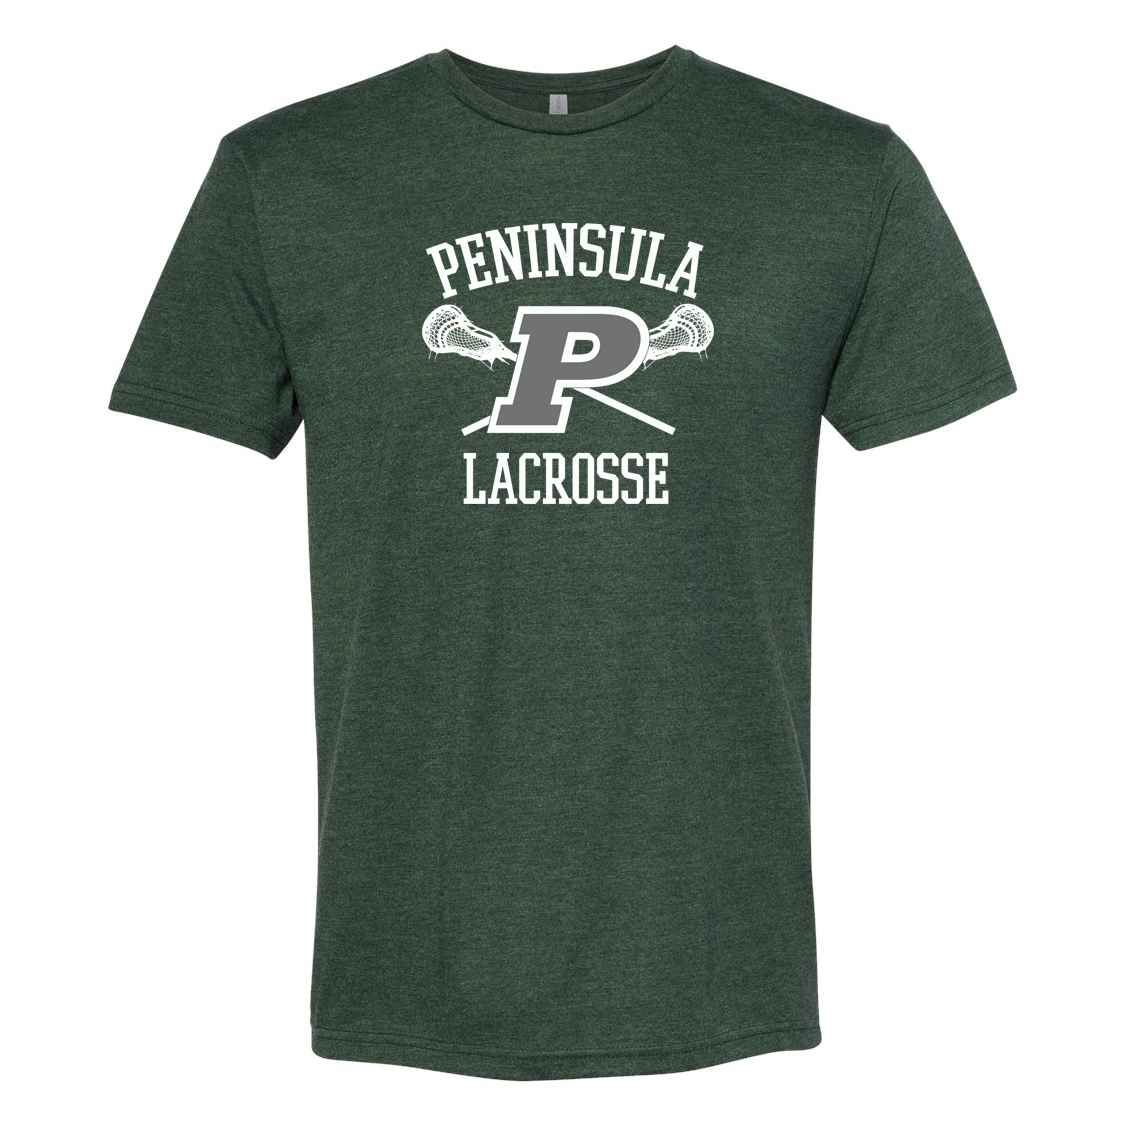 Peninsula Lacrosse Next Level Triblend Short Sleeve Crew